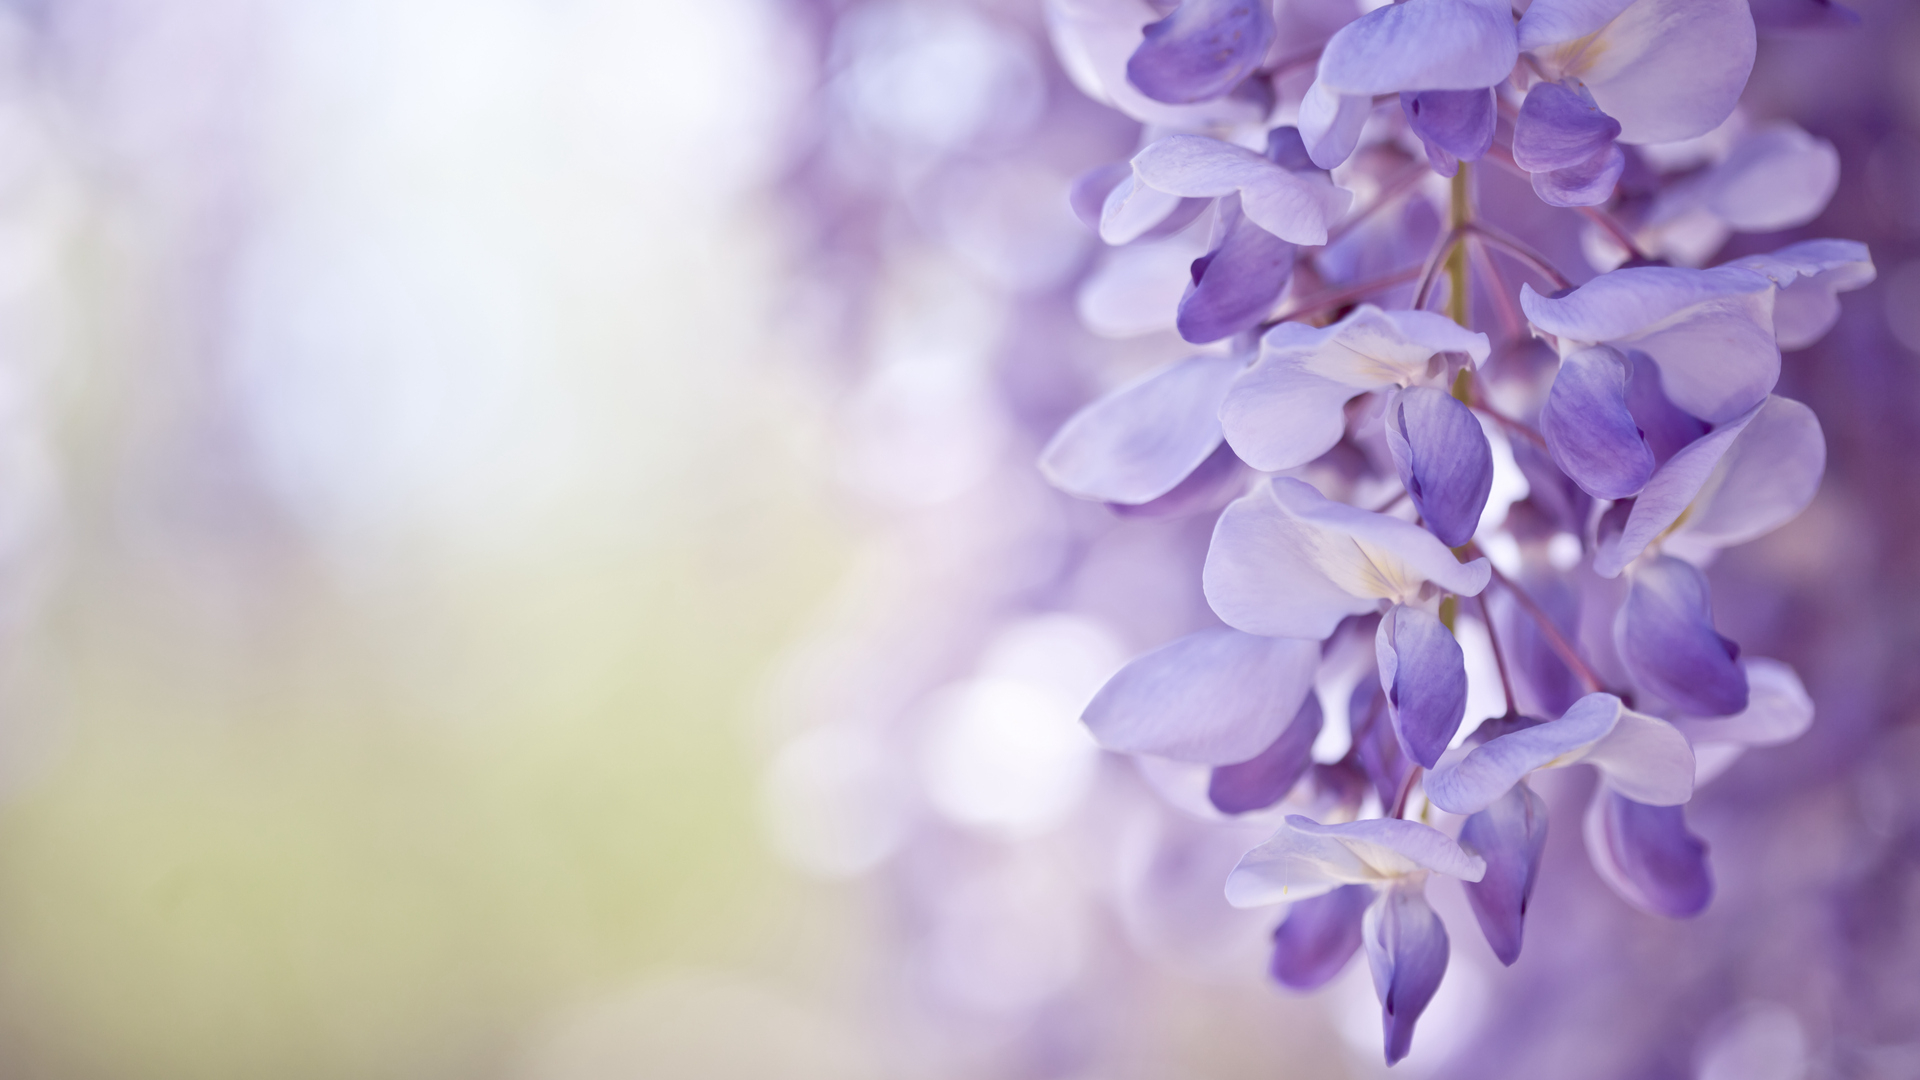 Chinese wisteria: 'Wind chimes' in dreamy purple - CGTN